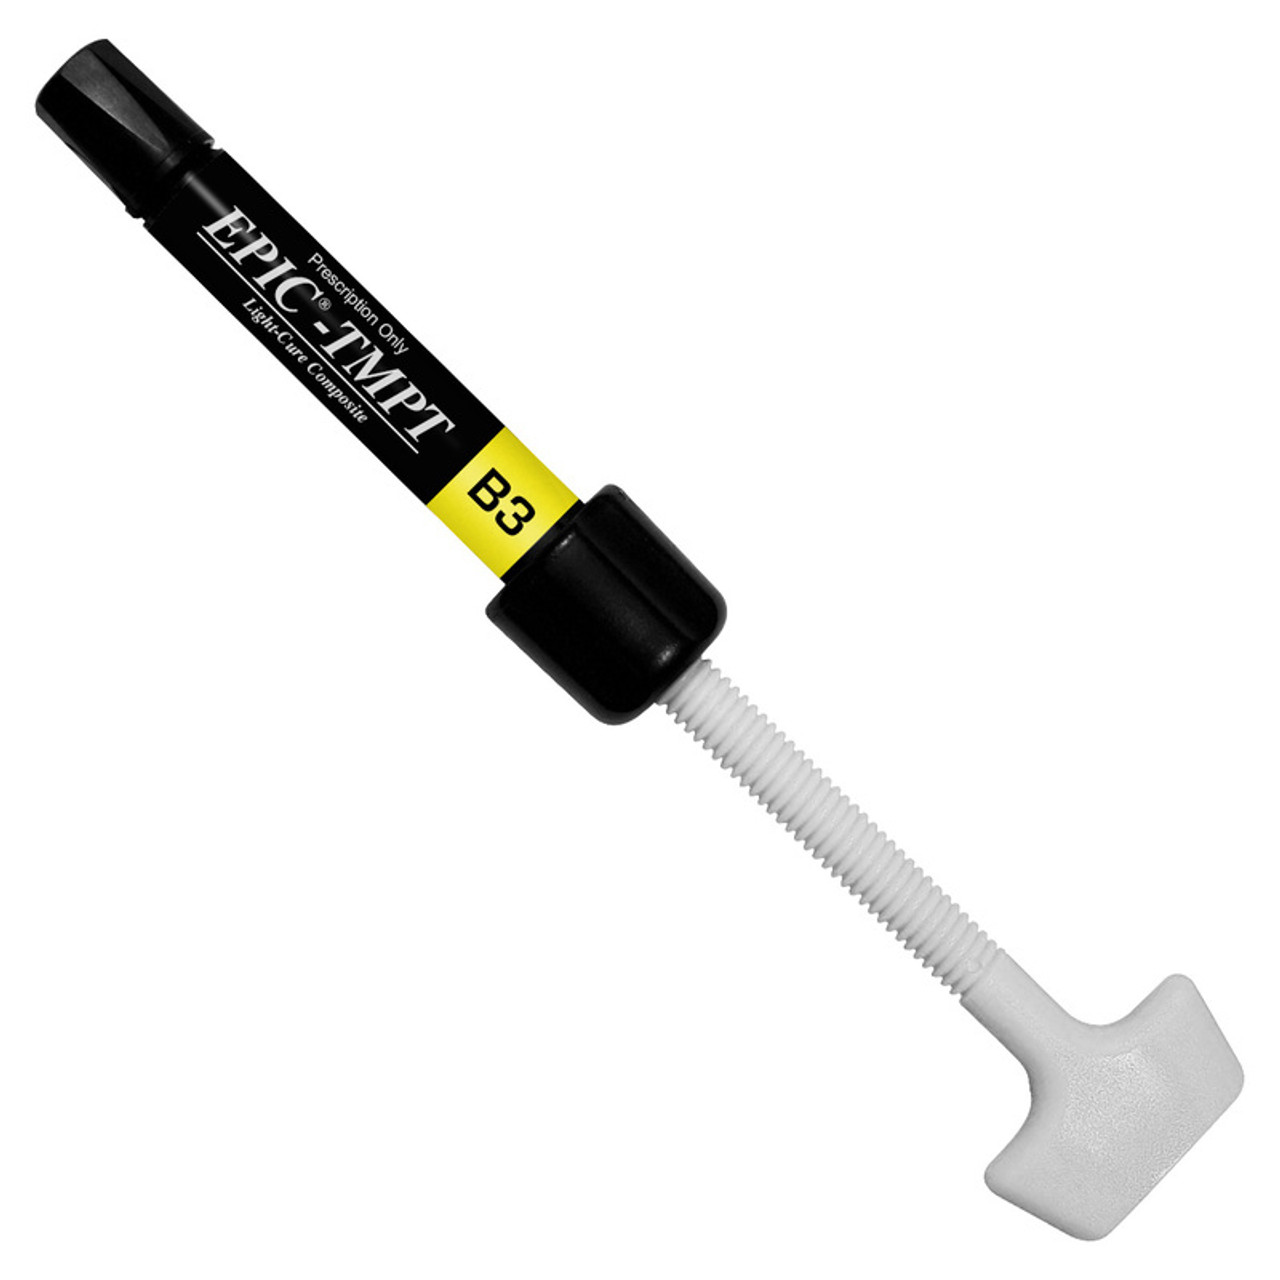 EPIC-TMPT B3 (3 gram syringe)